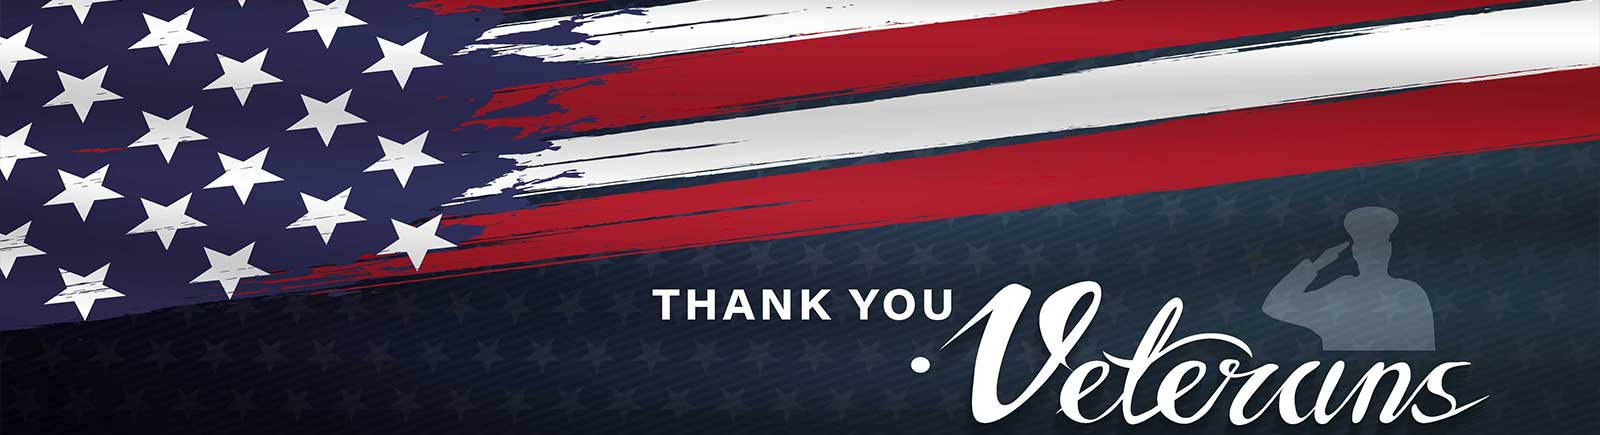 Thank you veterans banner